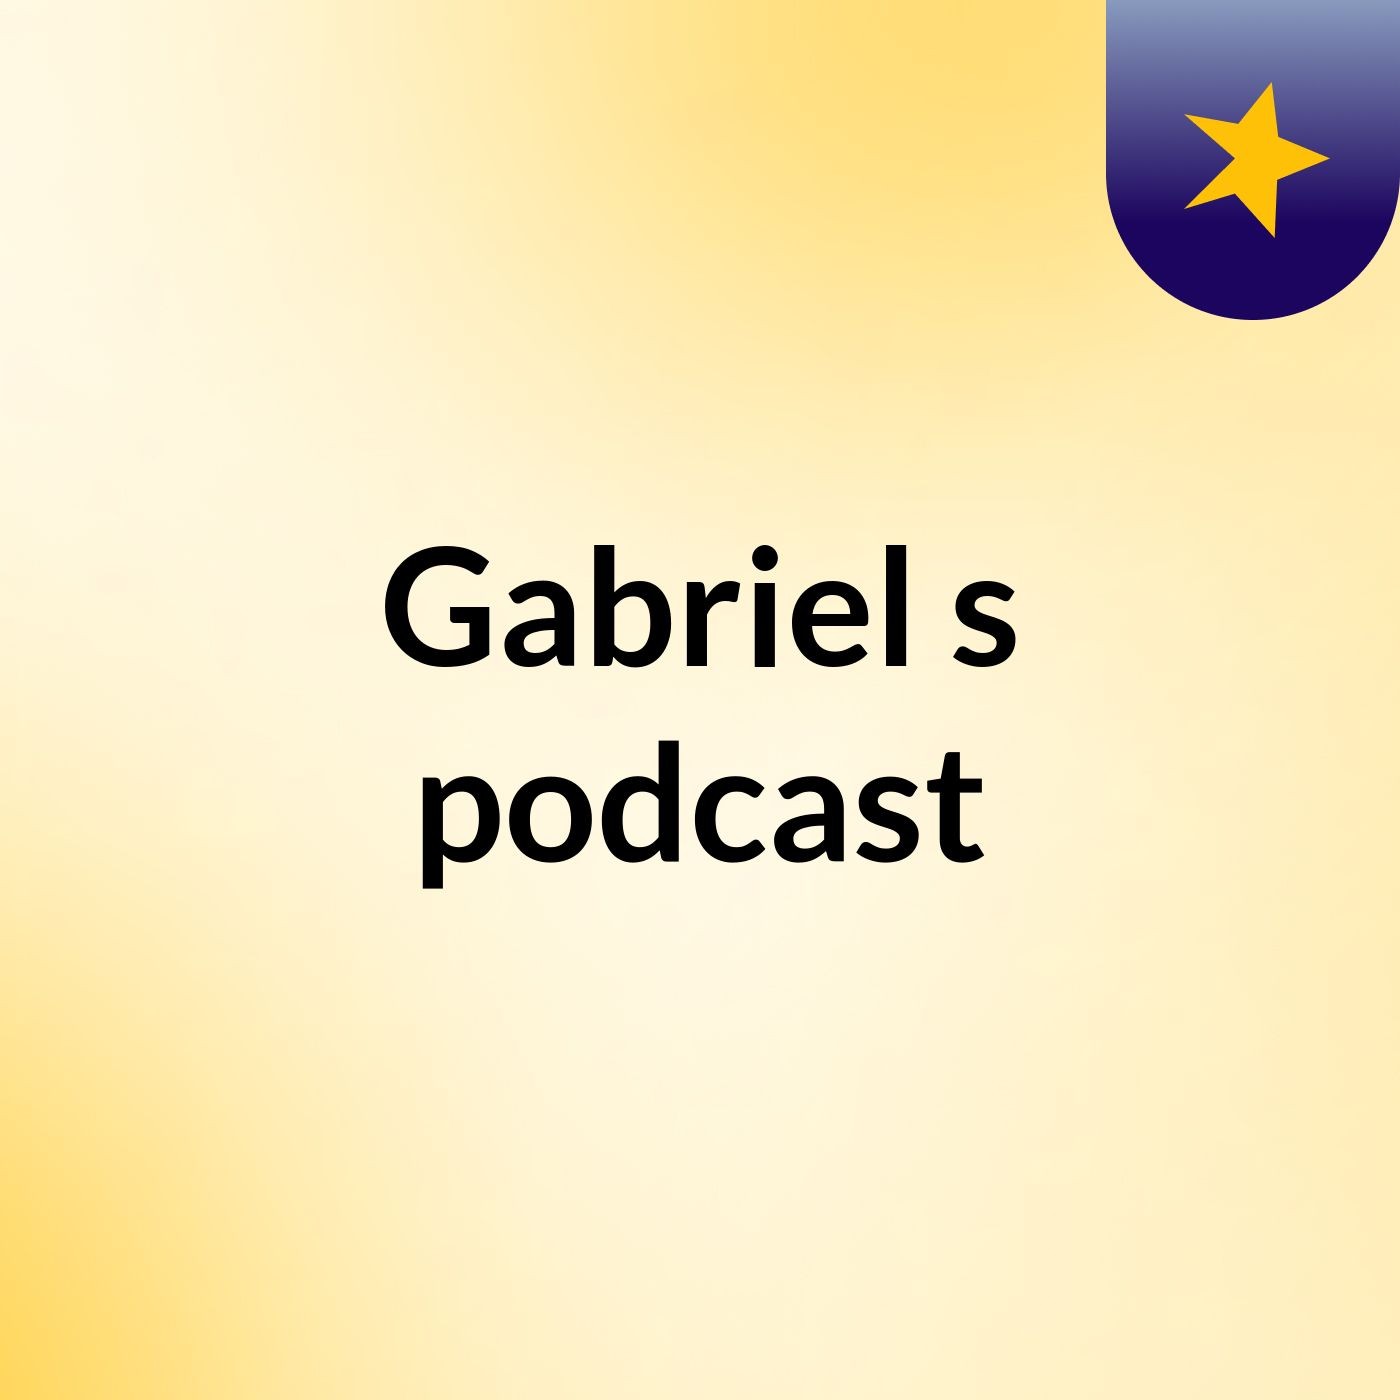 Gabriel's podcast